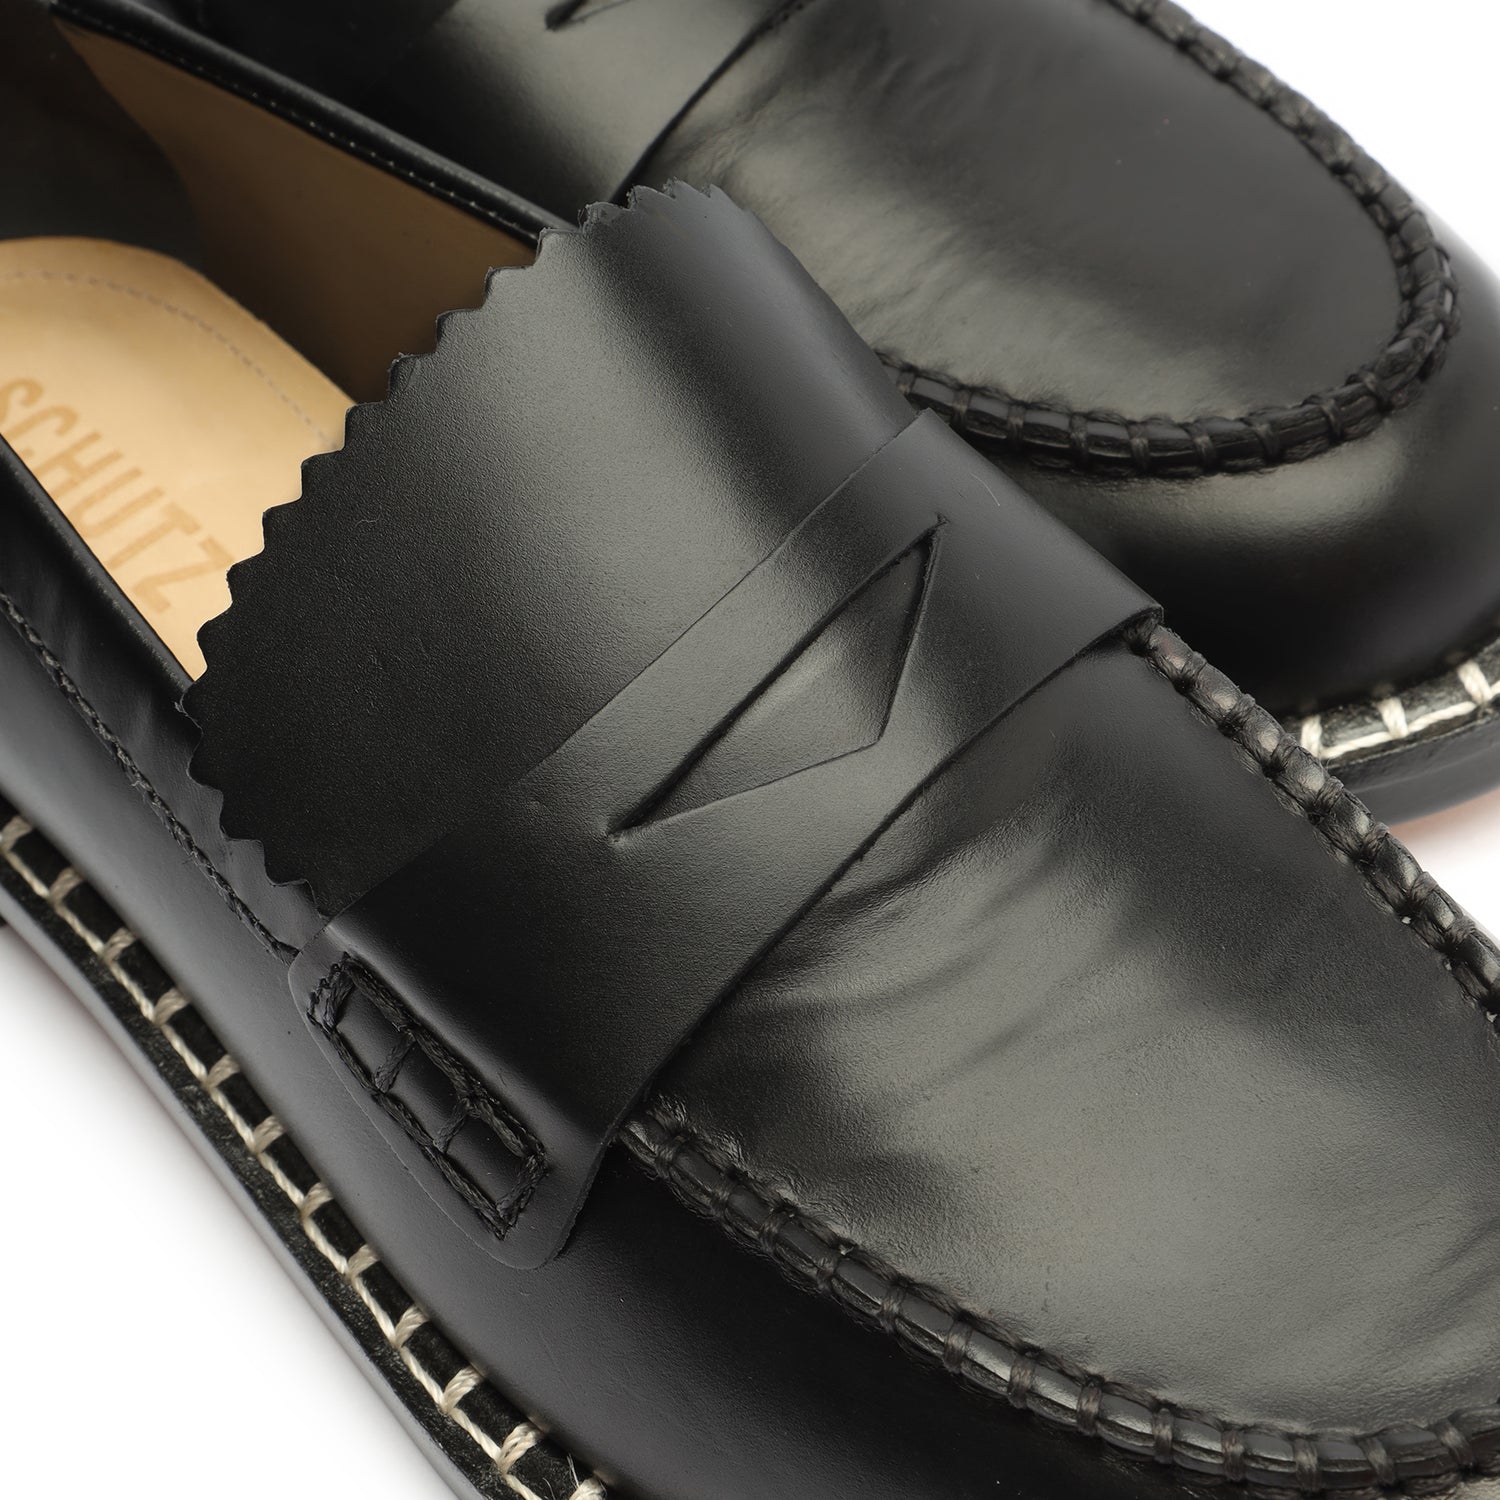 Christie Leather Flat Flats Open Stock    - Schutz Shoes